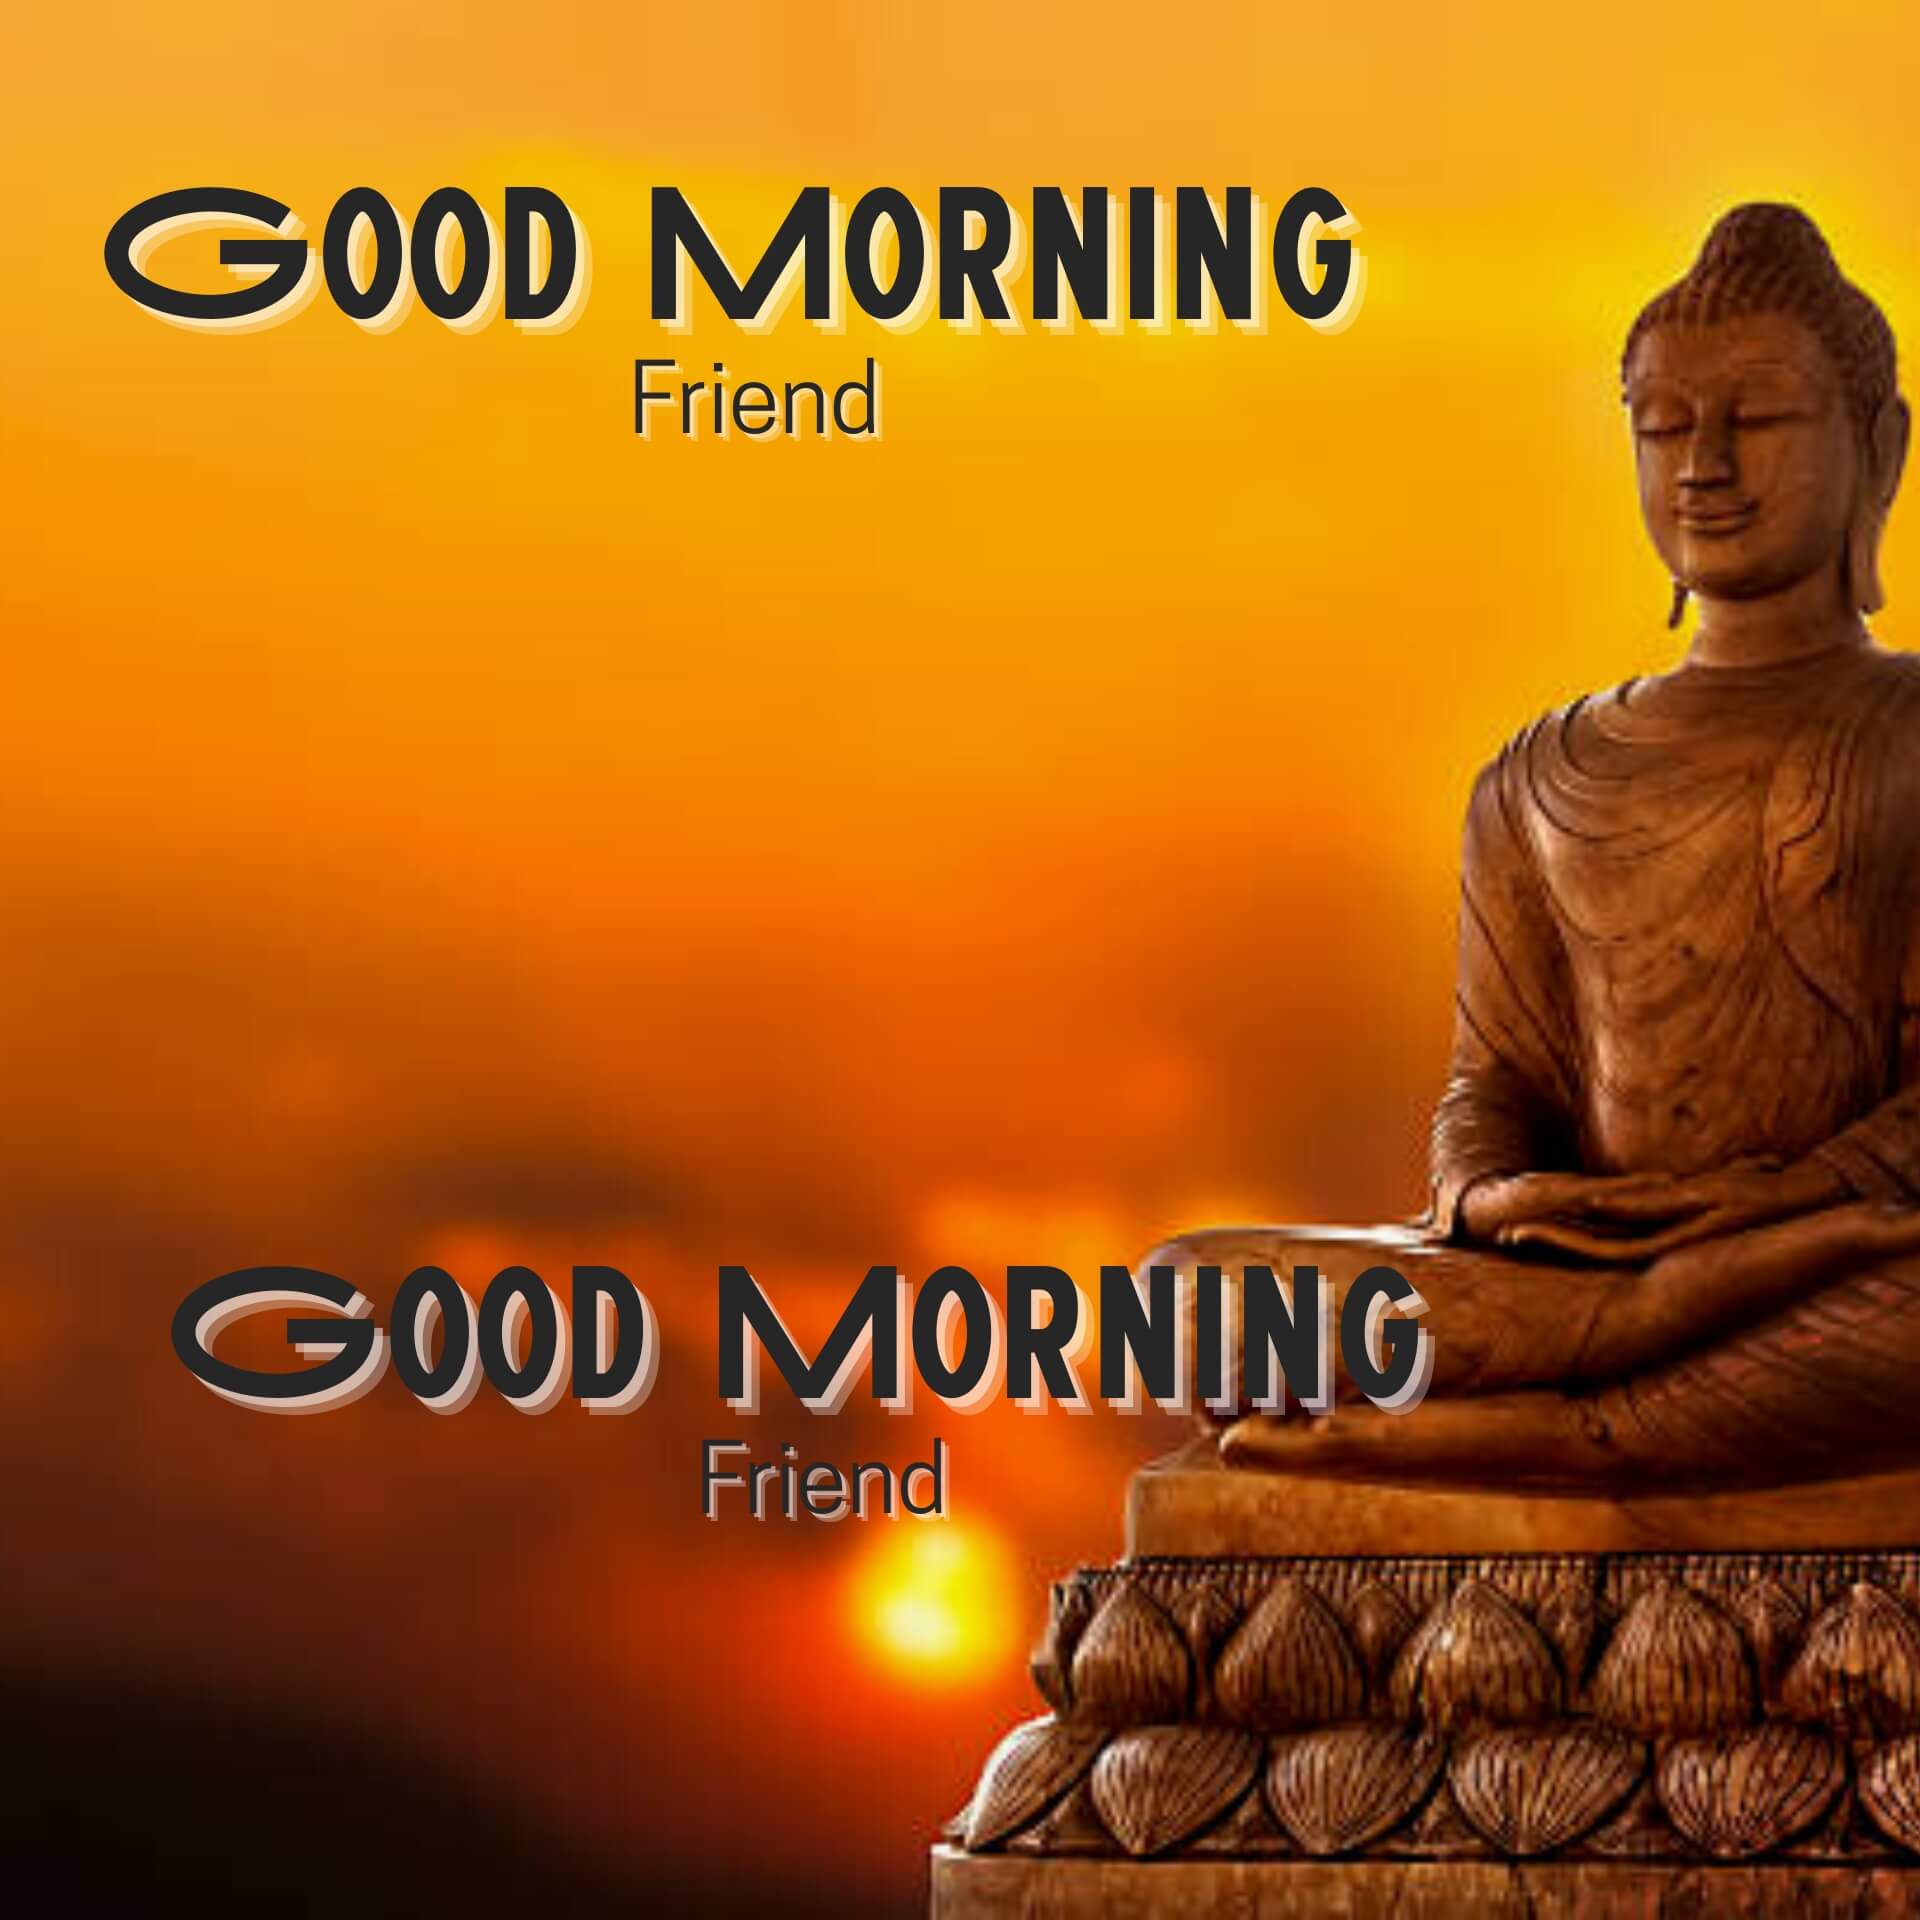 Gautam Buddha Good Morning Pics images Download